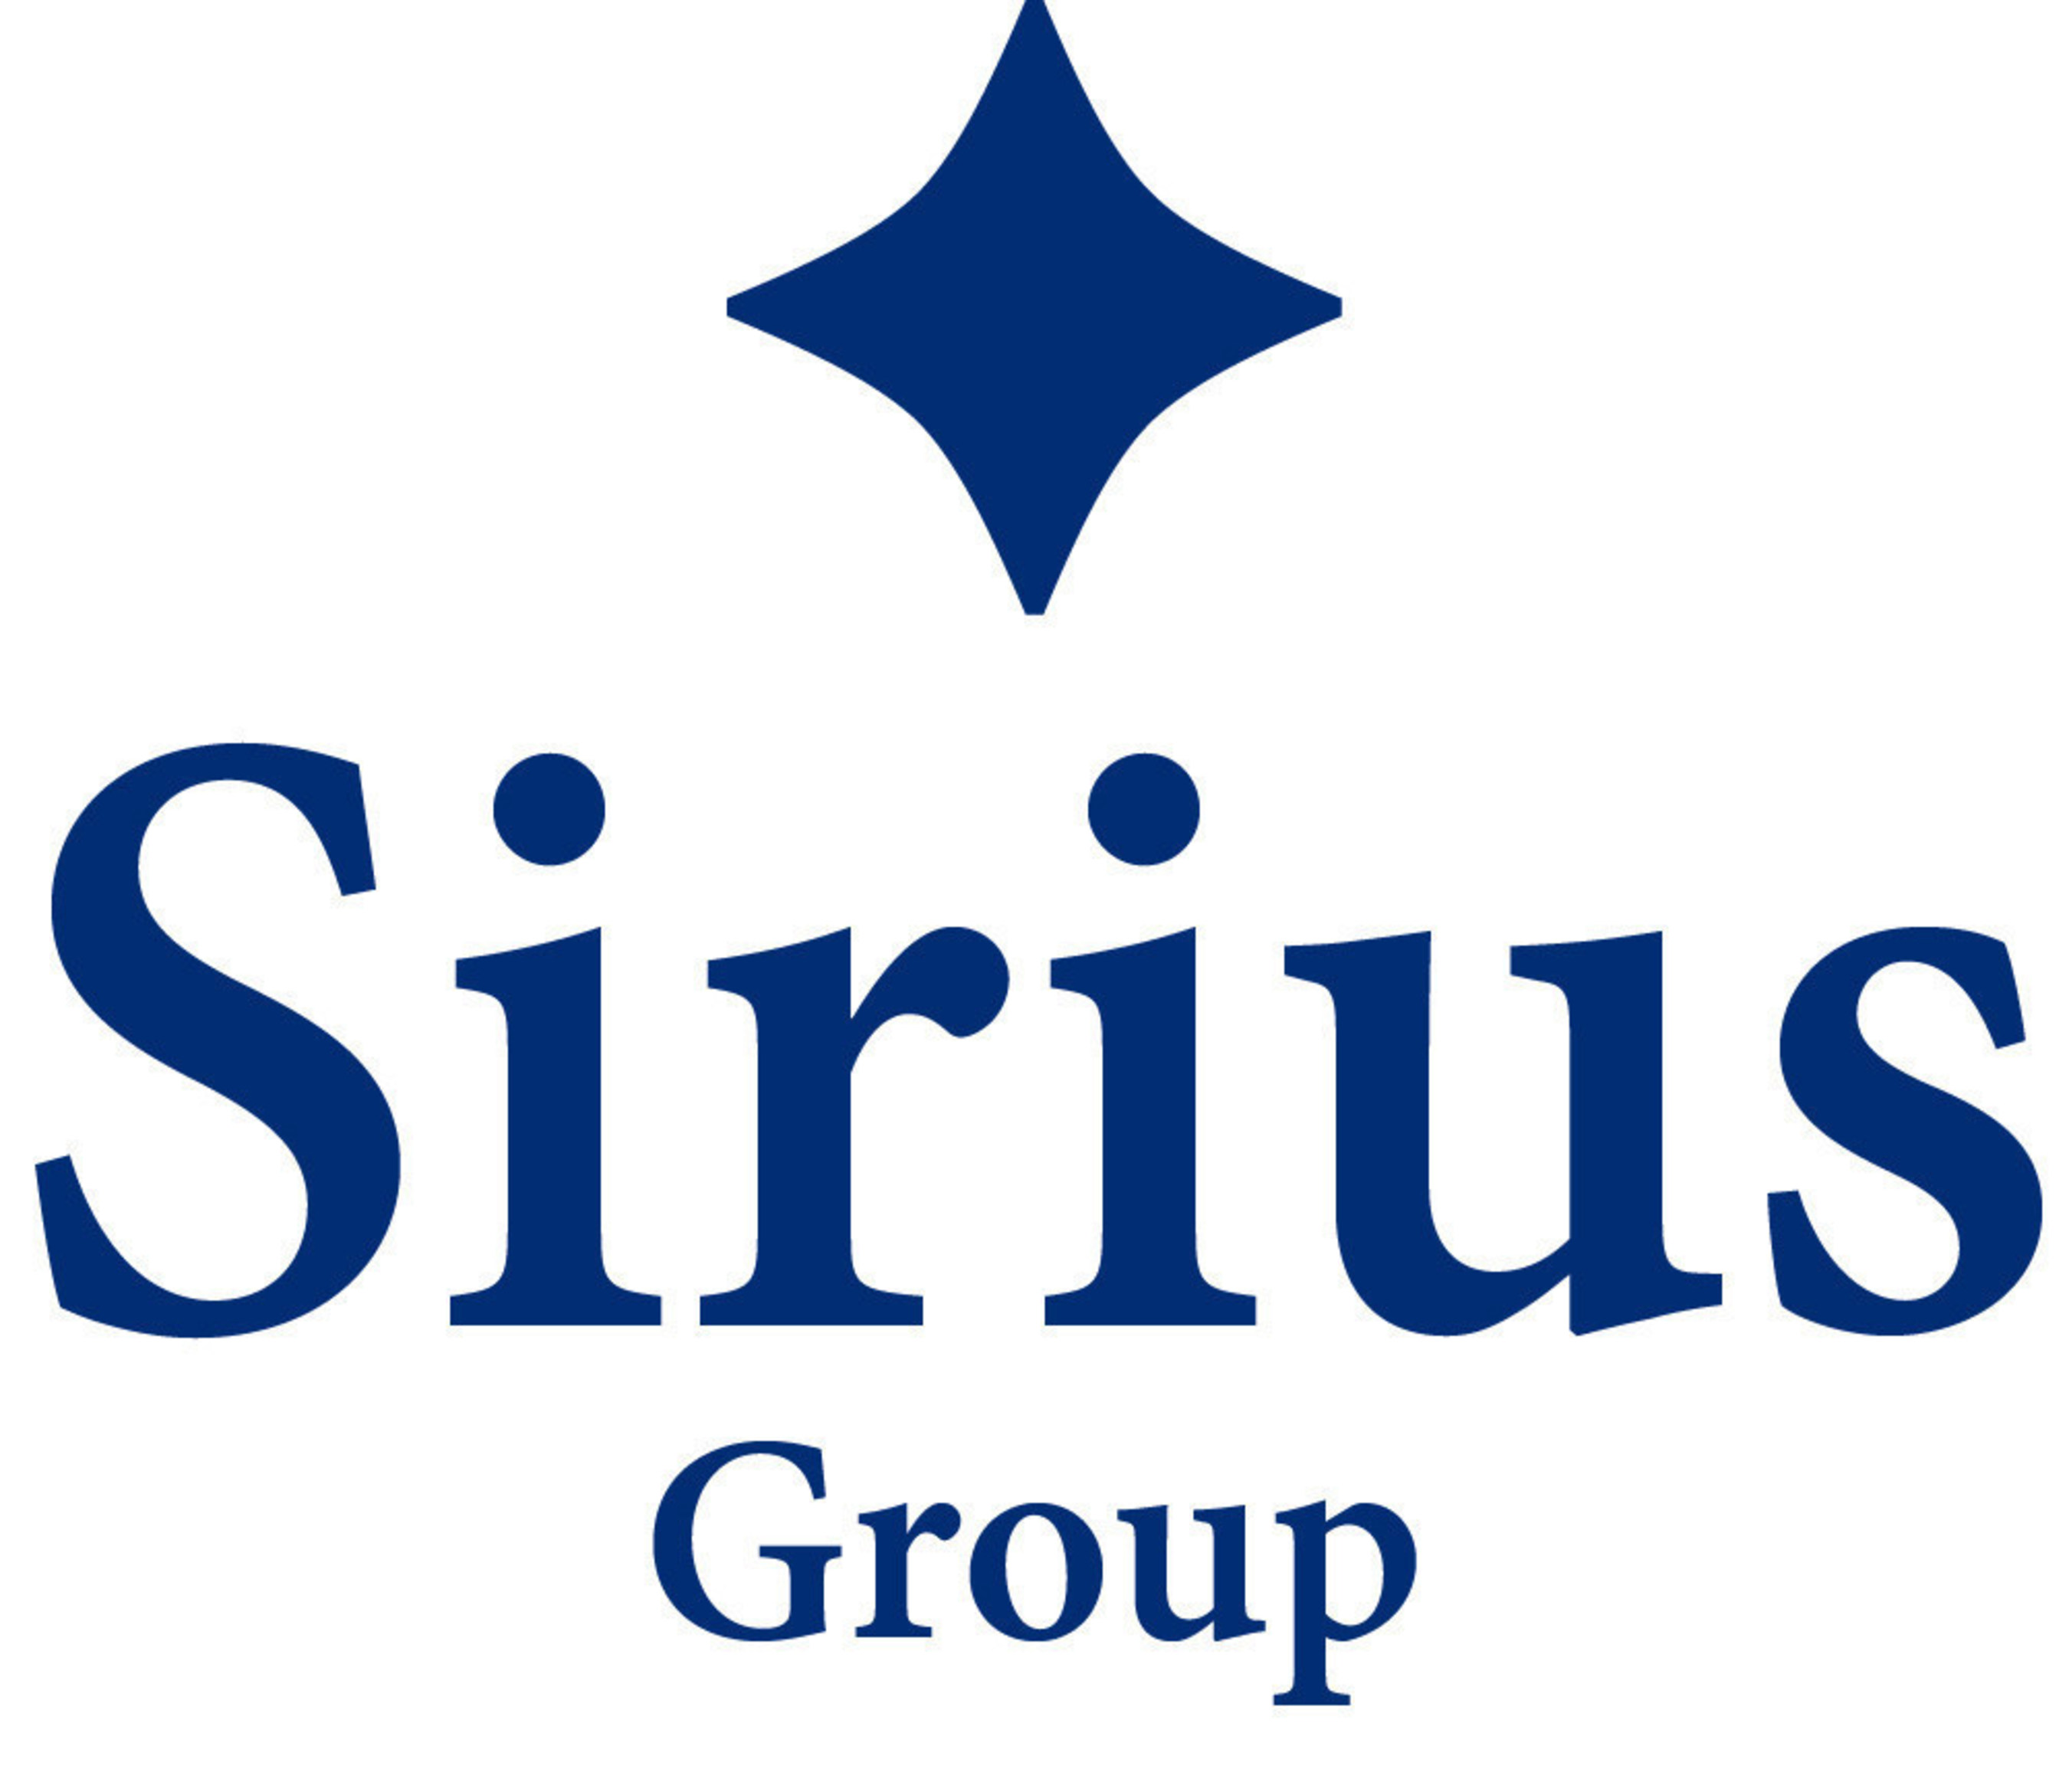 Sirius International Insurance Group, Ltd.